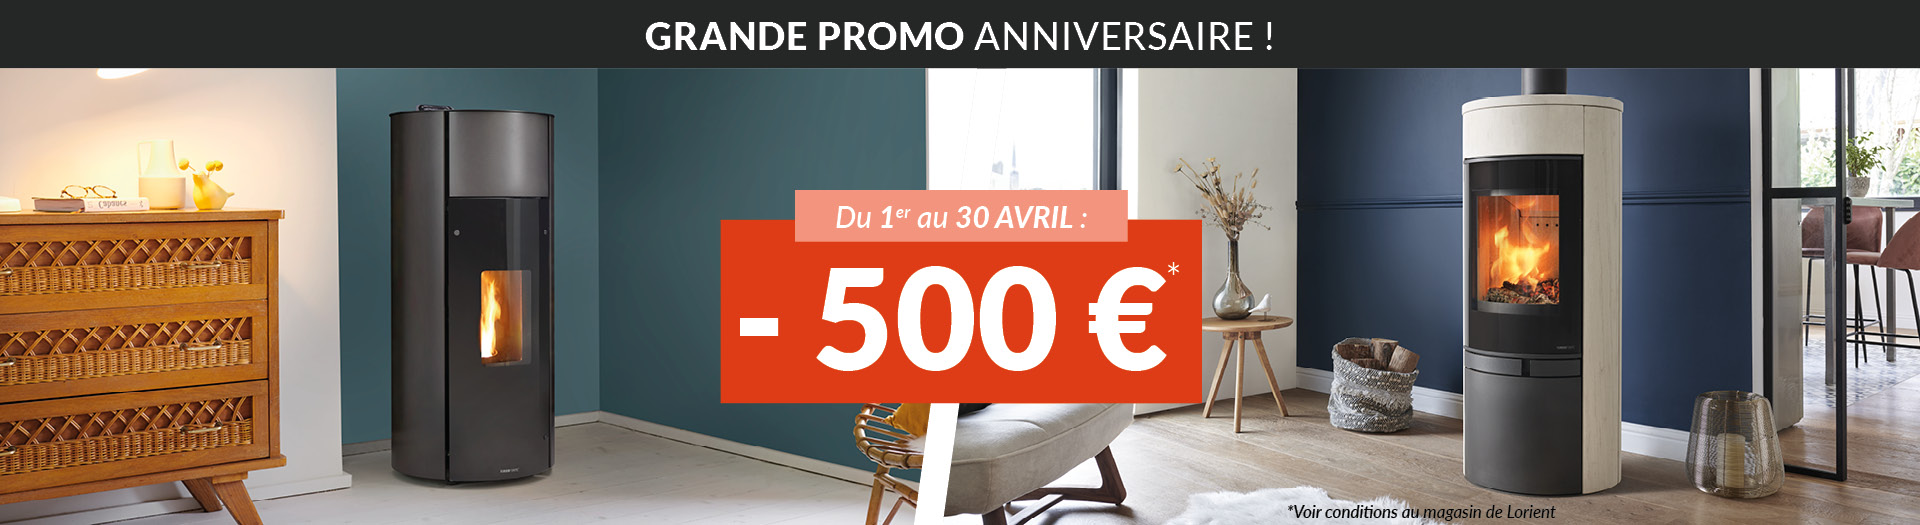 Grande promo d'anniversaire -500€ - Turbo Fonte Lorient